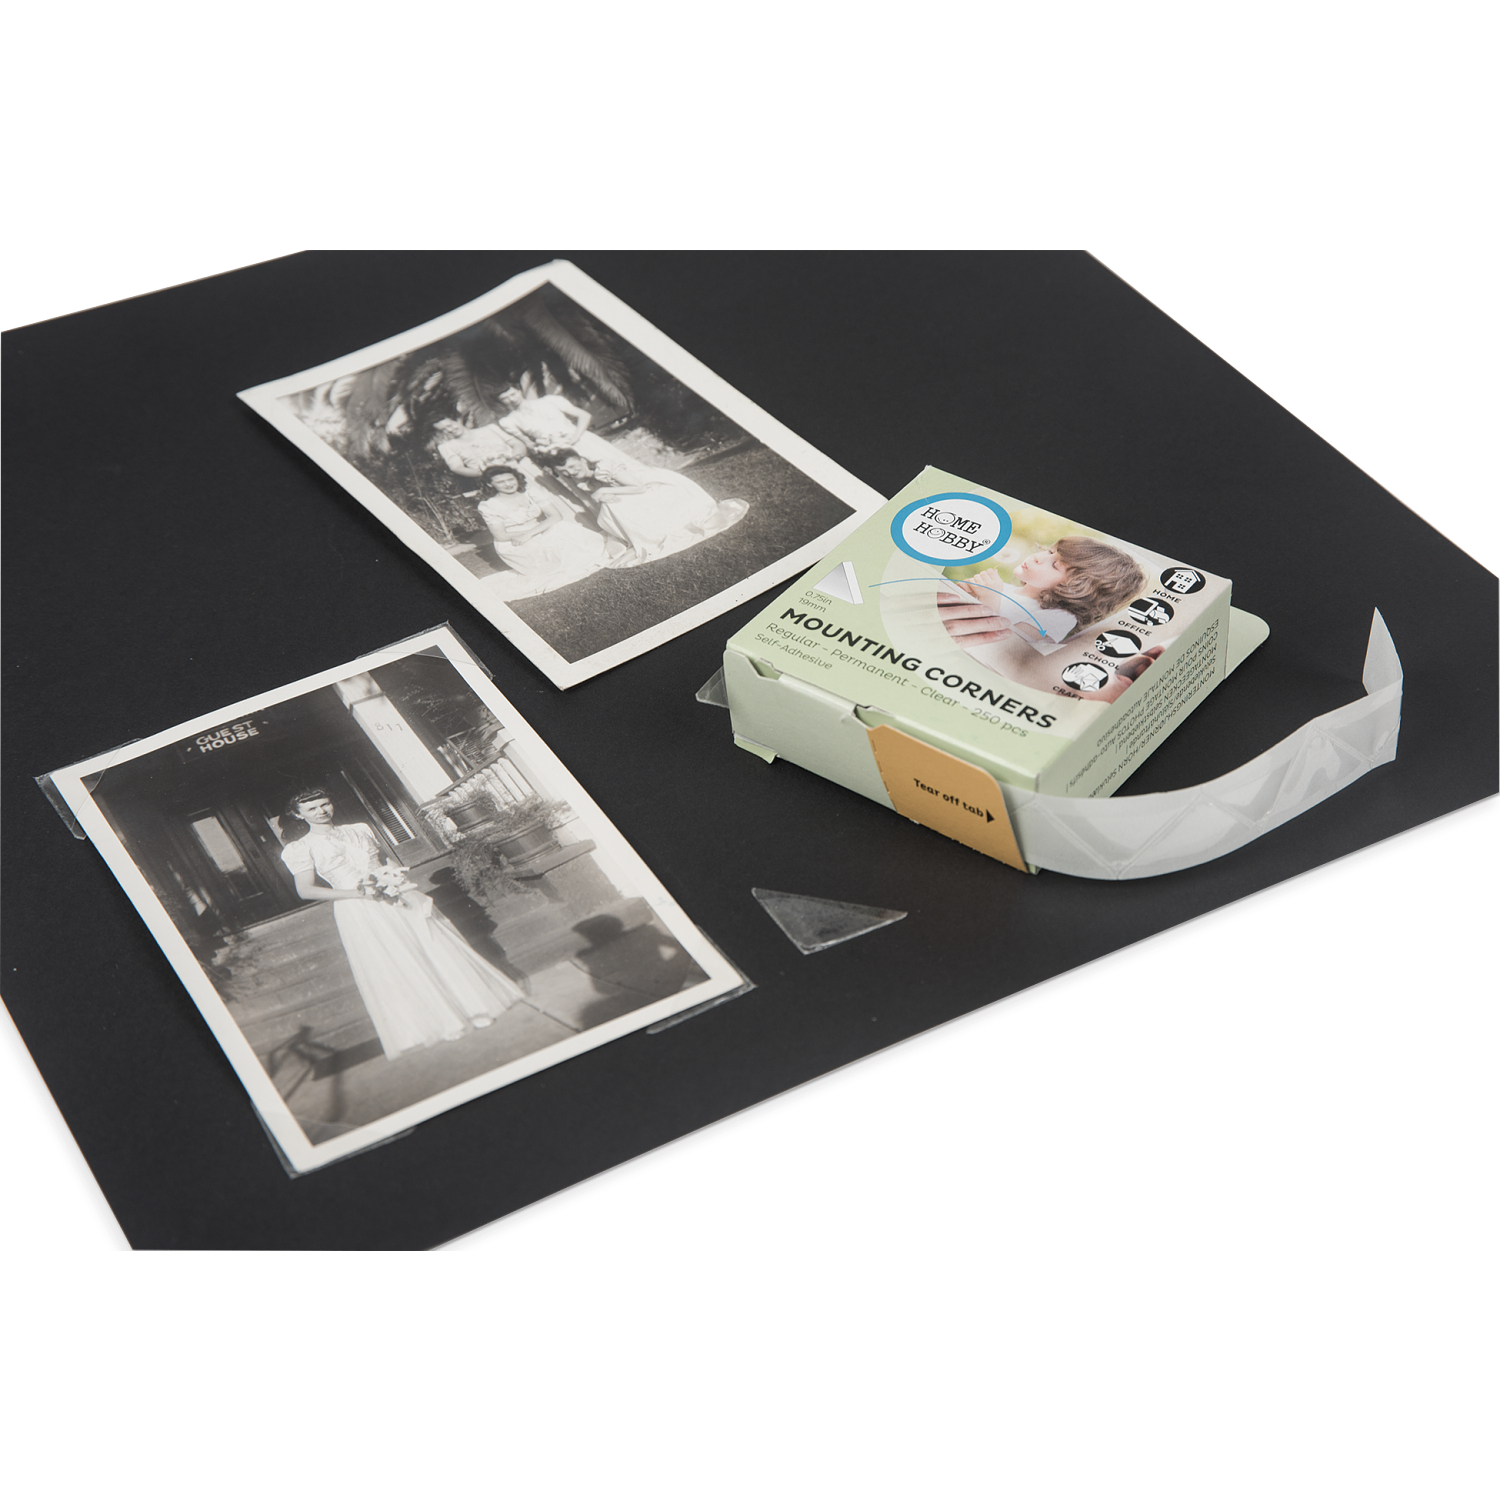 10 Sheets Photo Mounting Corners Self-adhesive Paper Photo Corner